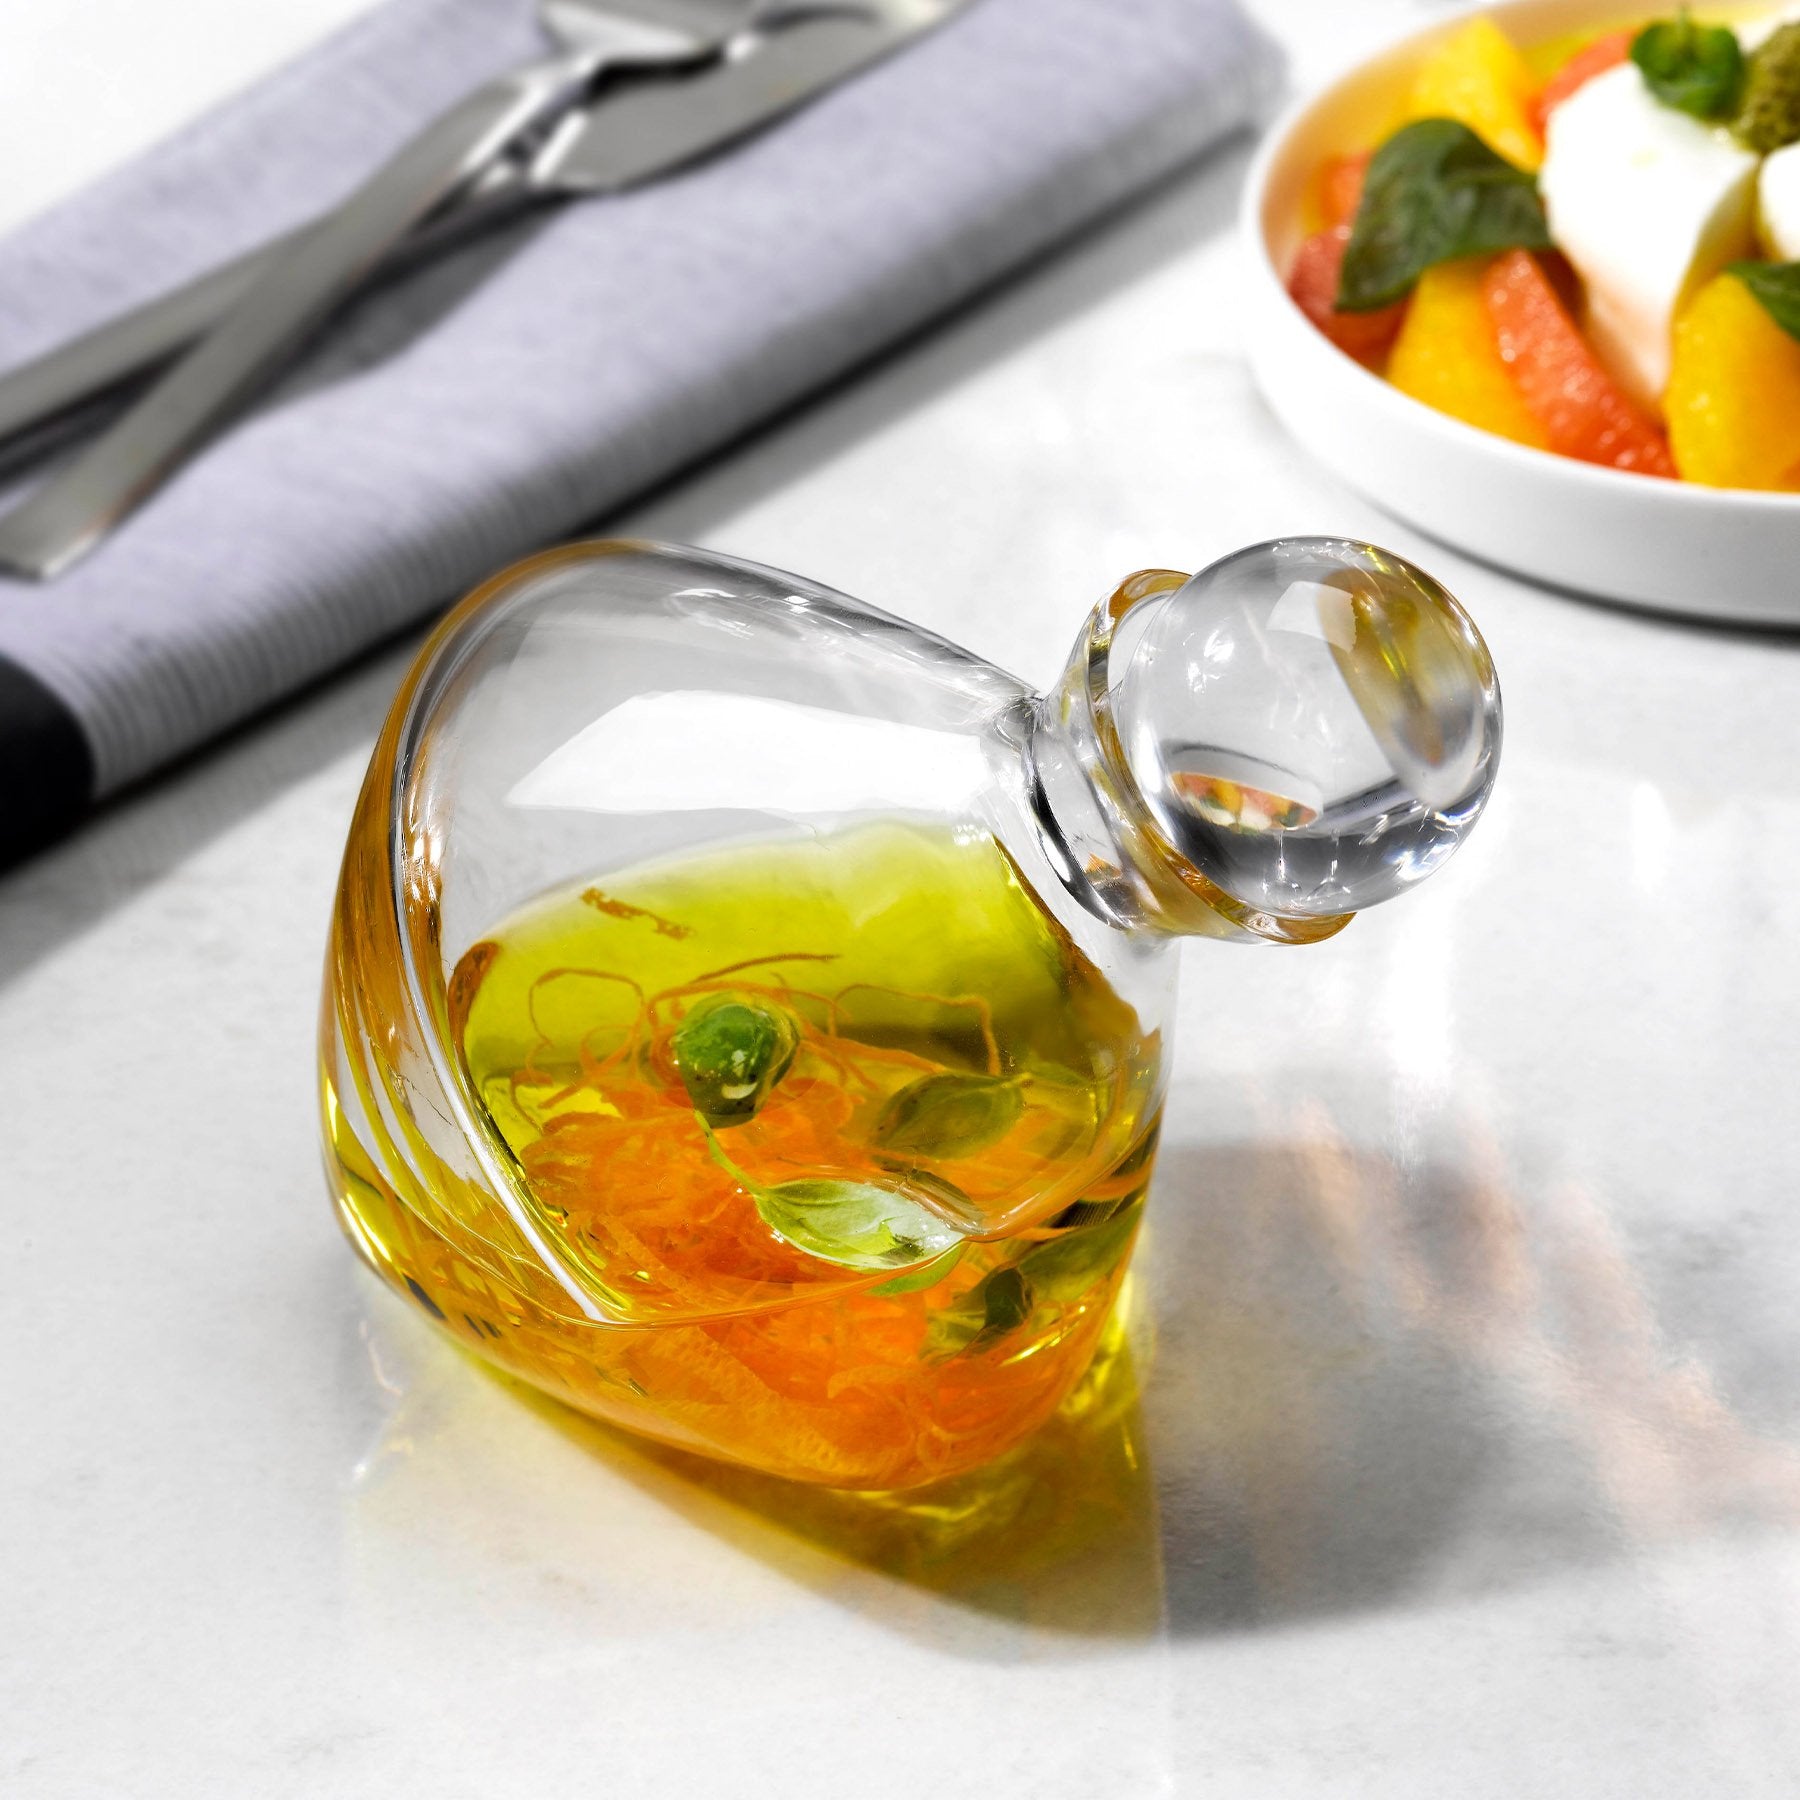 Rustic oil glass / Aceitera rústica cristal